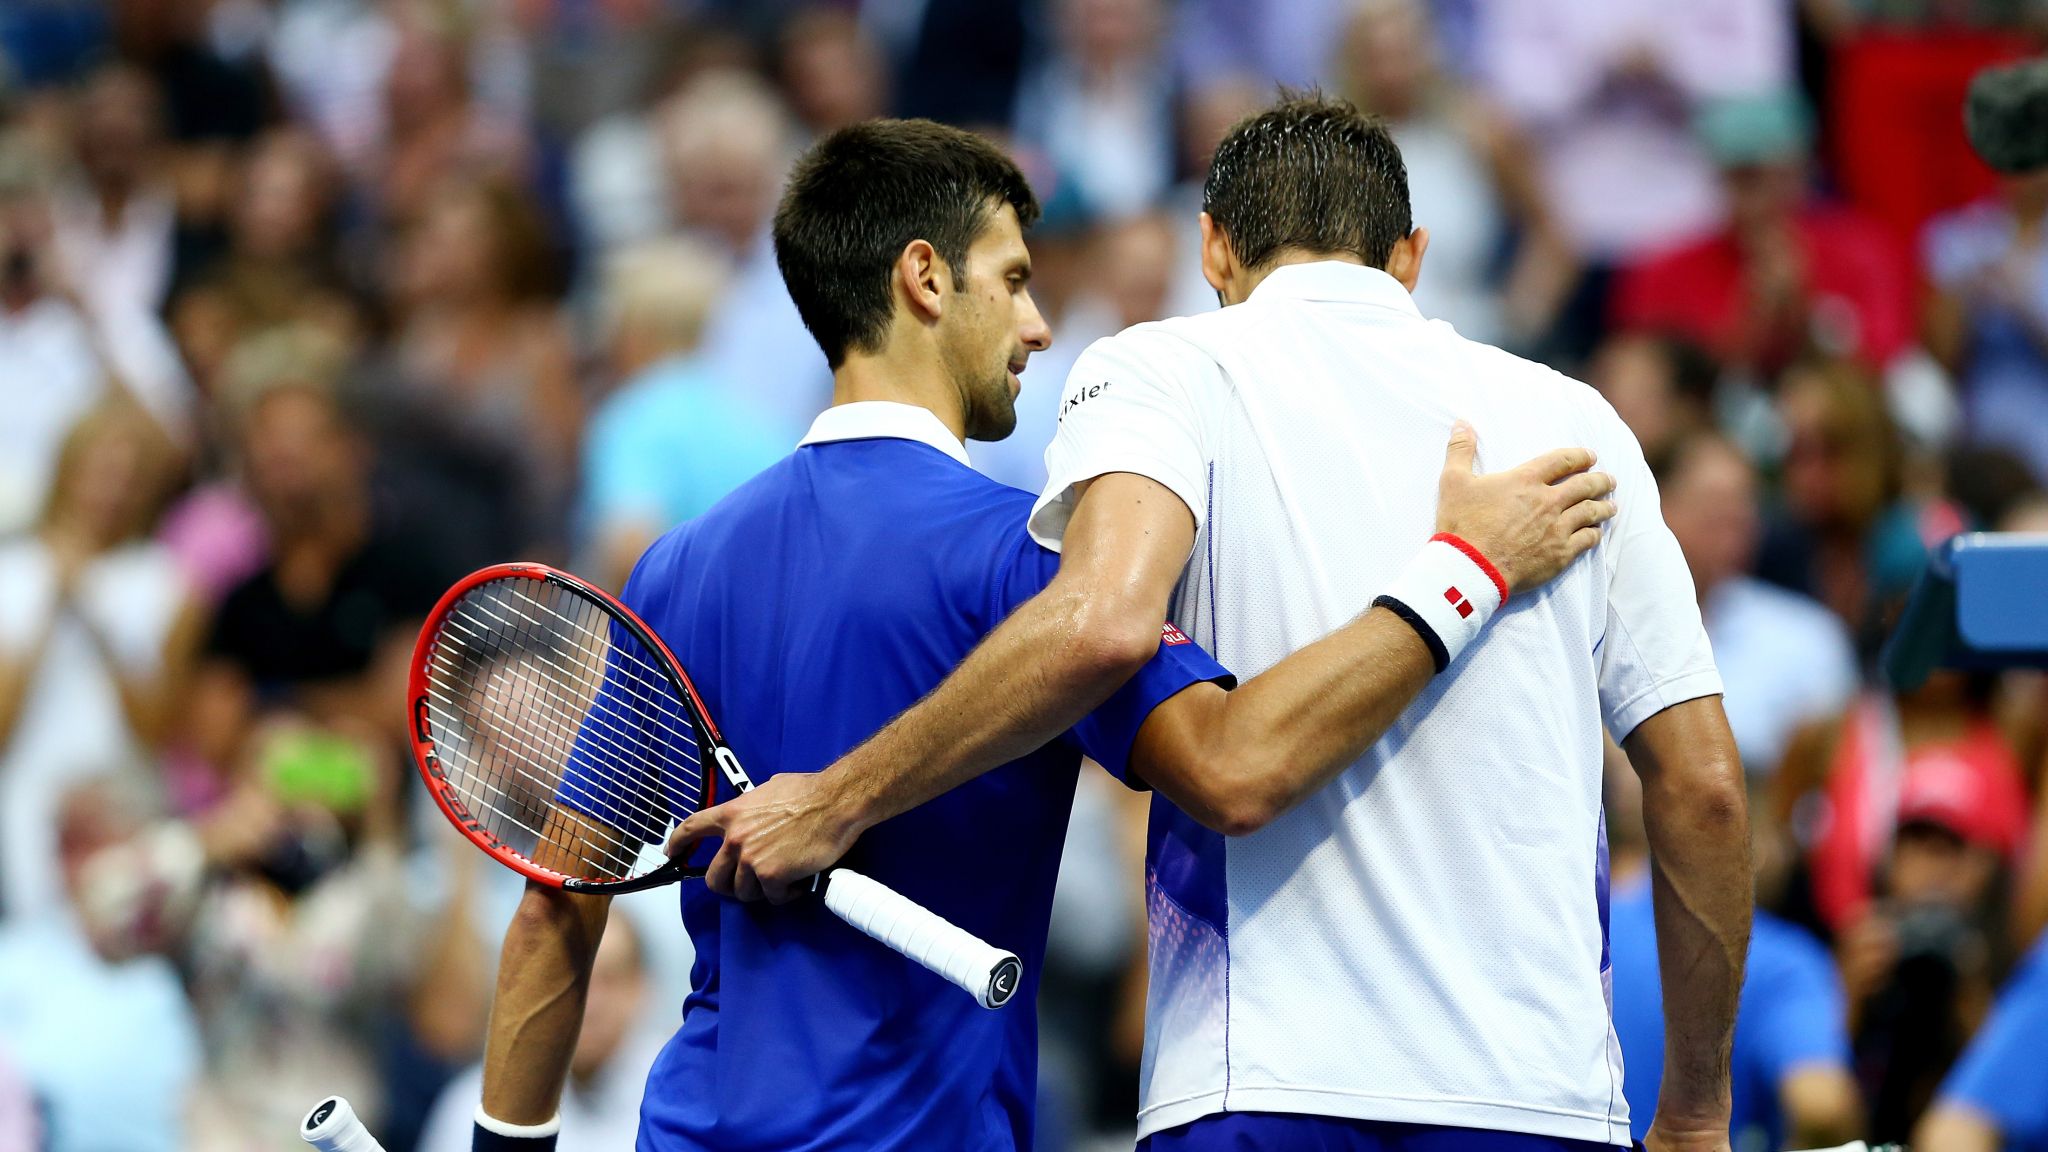 Novak Djokovic is full of confidence heading into Sundays US Open final Tennis News Sky Sports